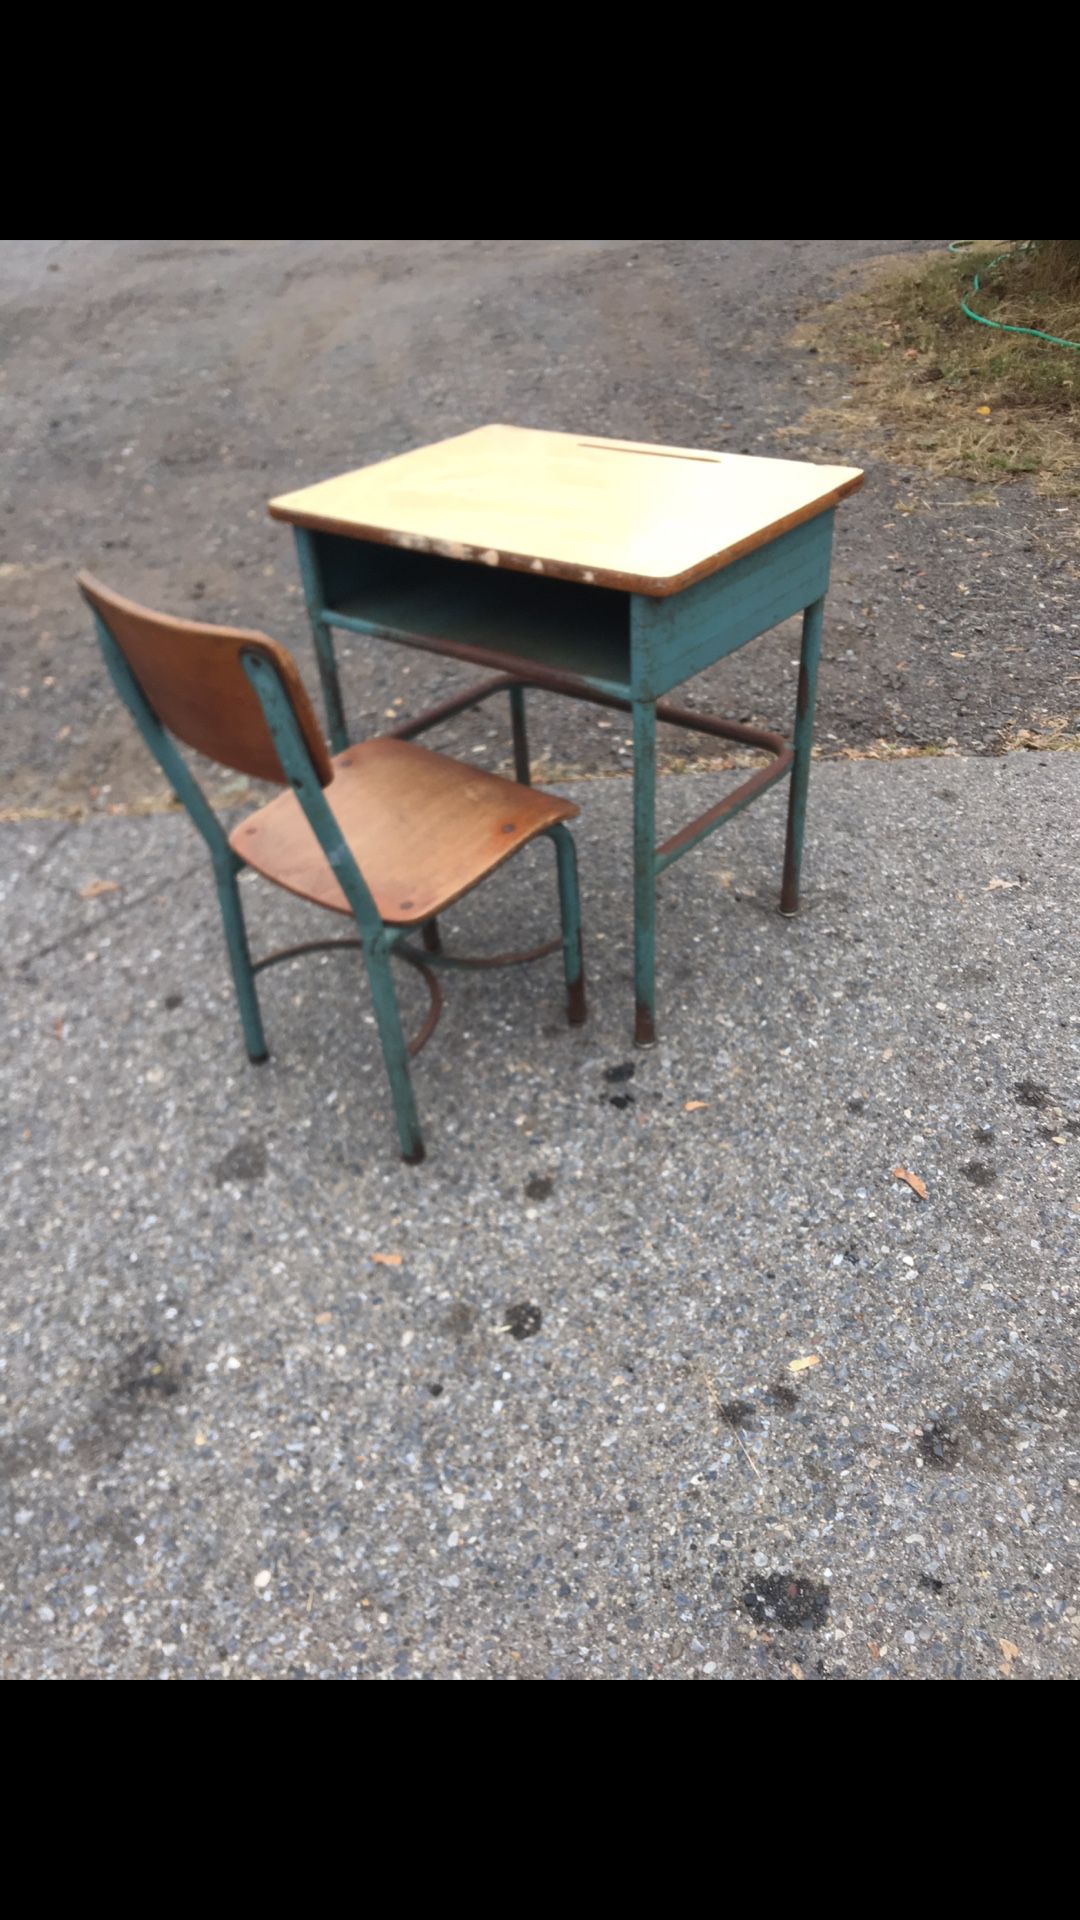 Antique child’s desk